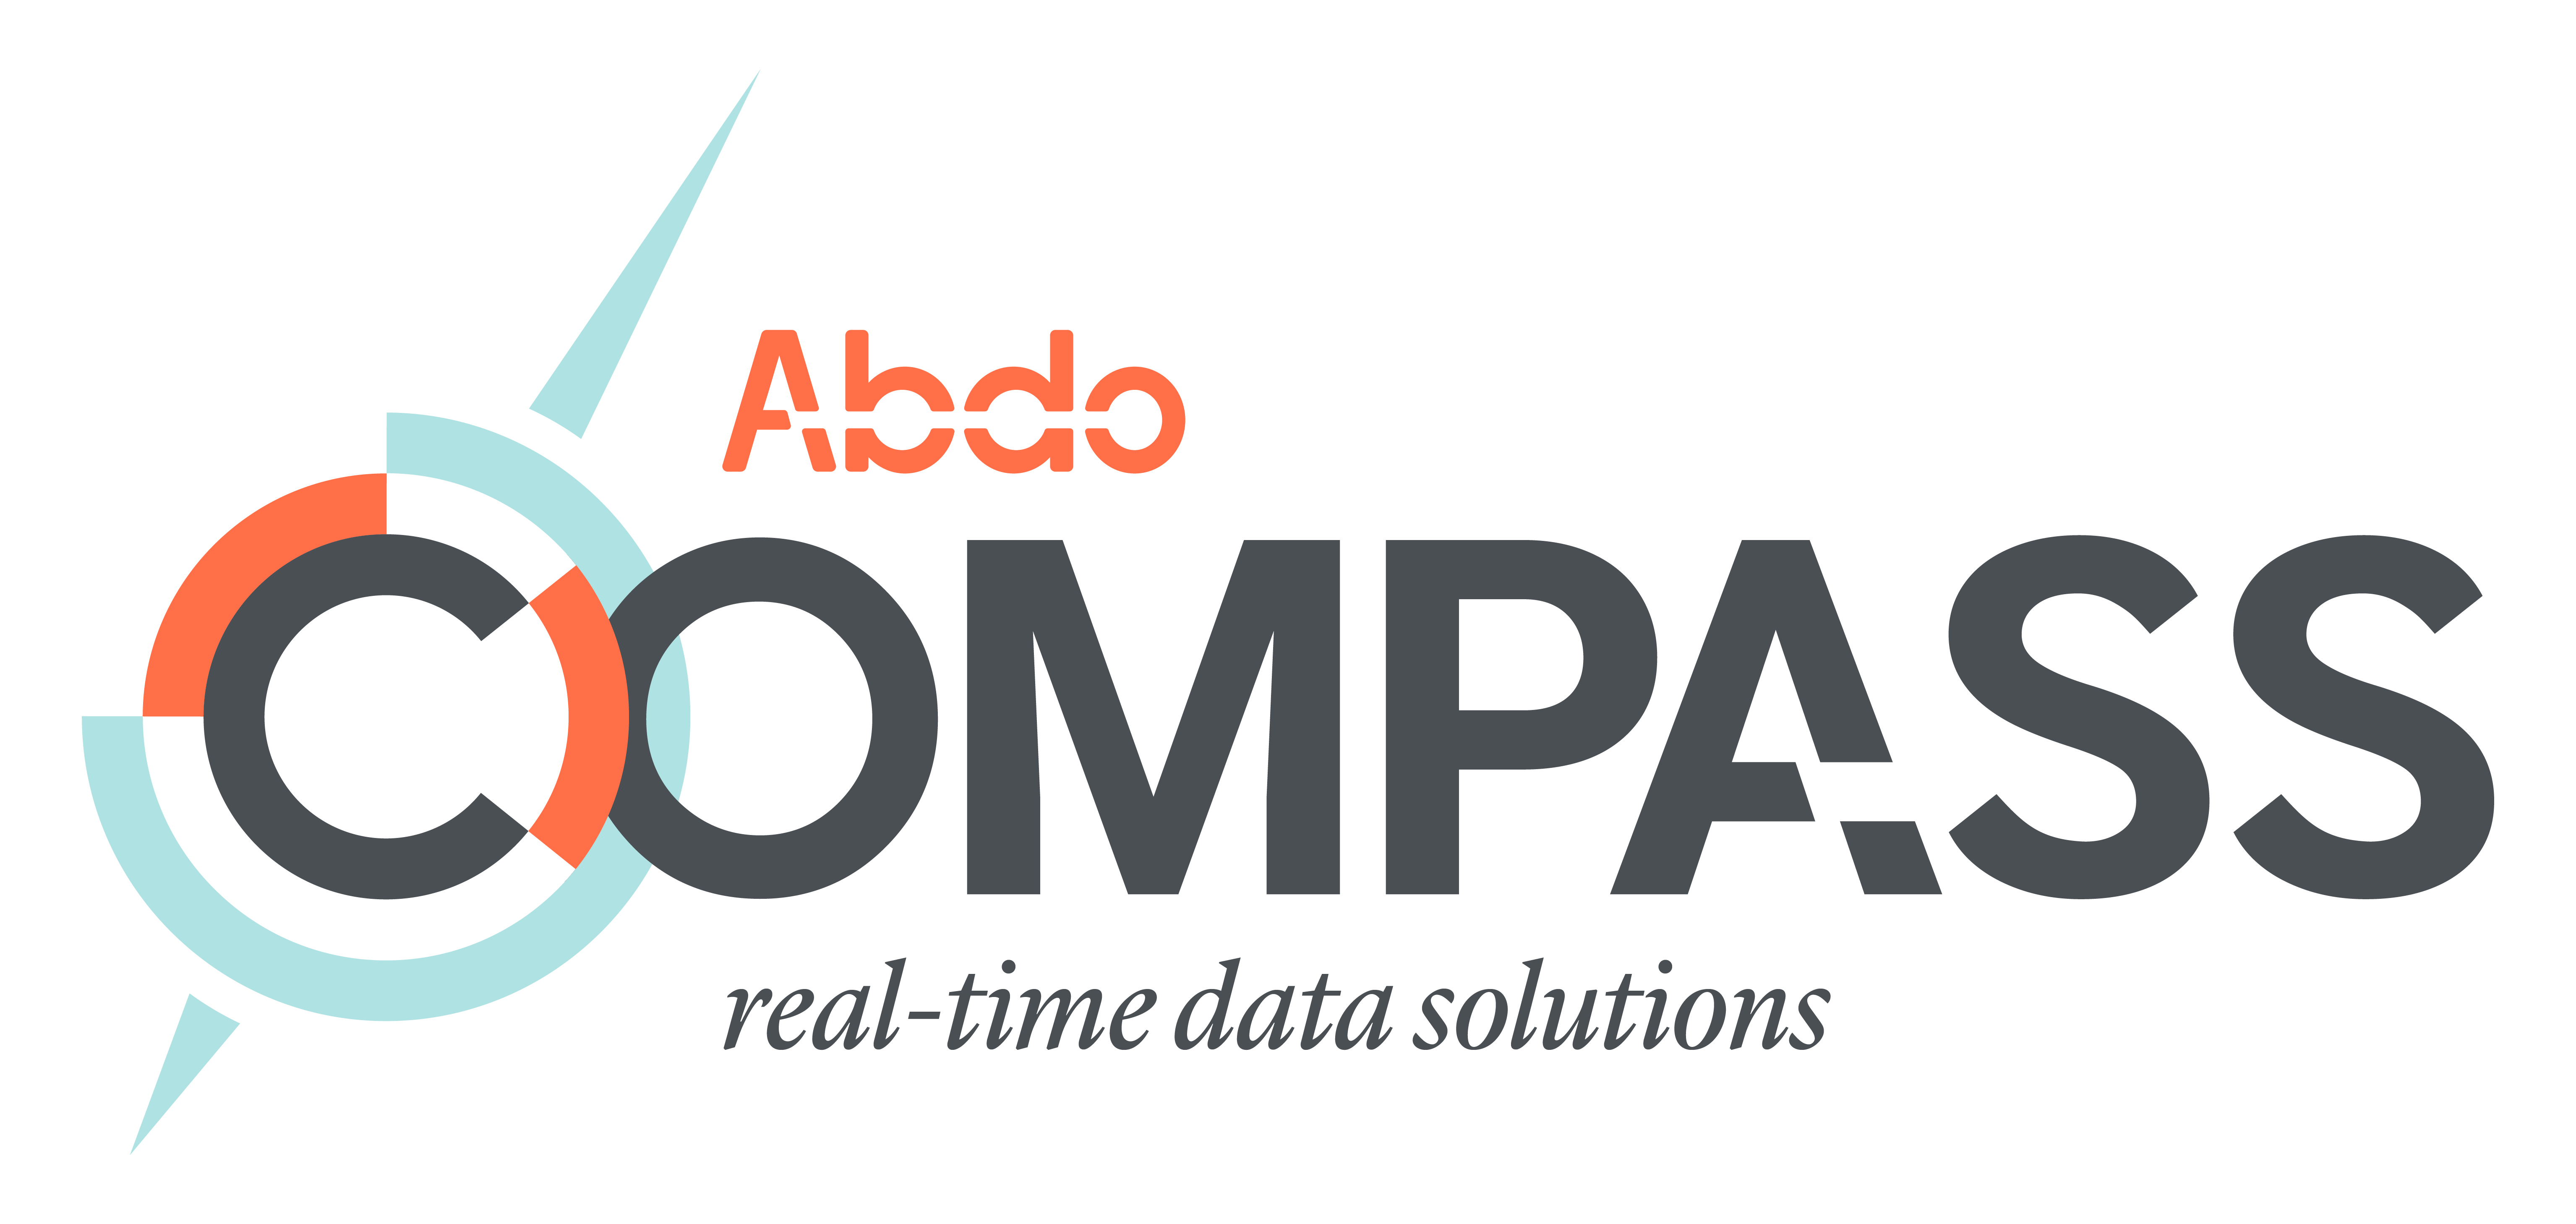 Abdo Compass Logo